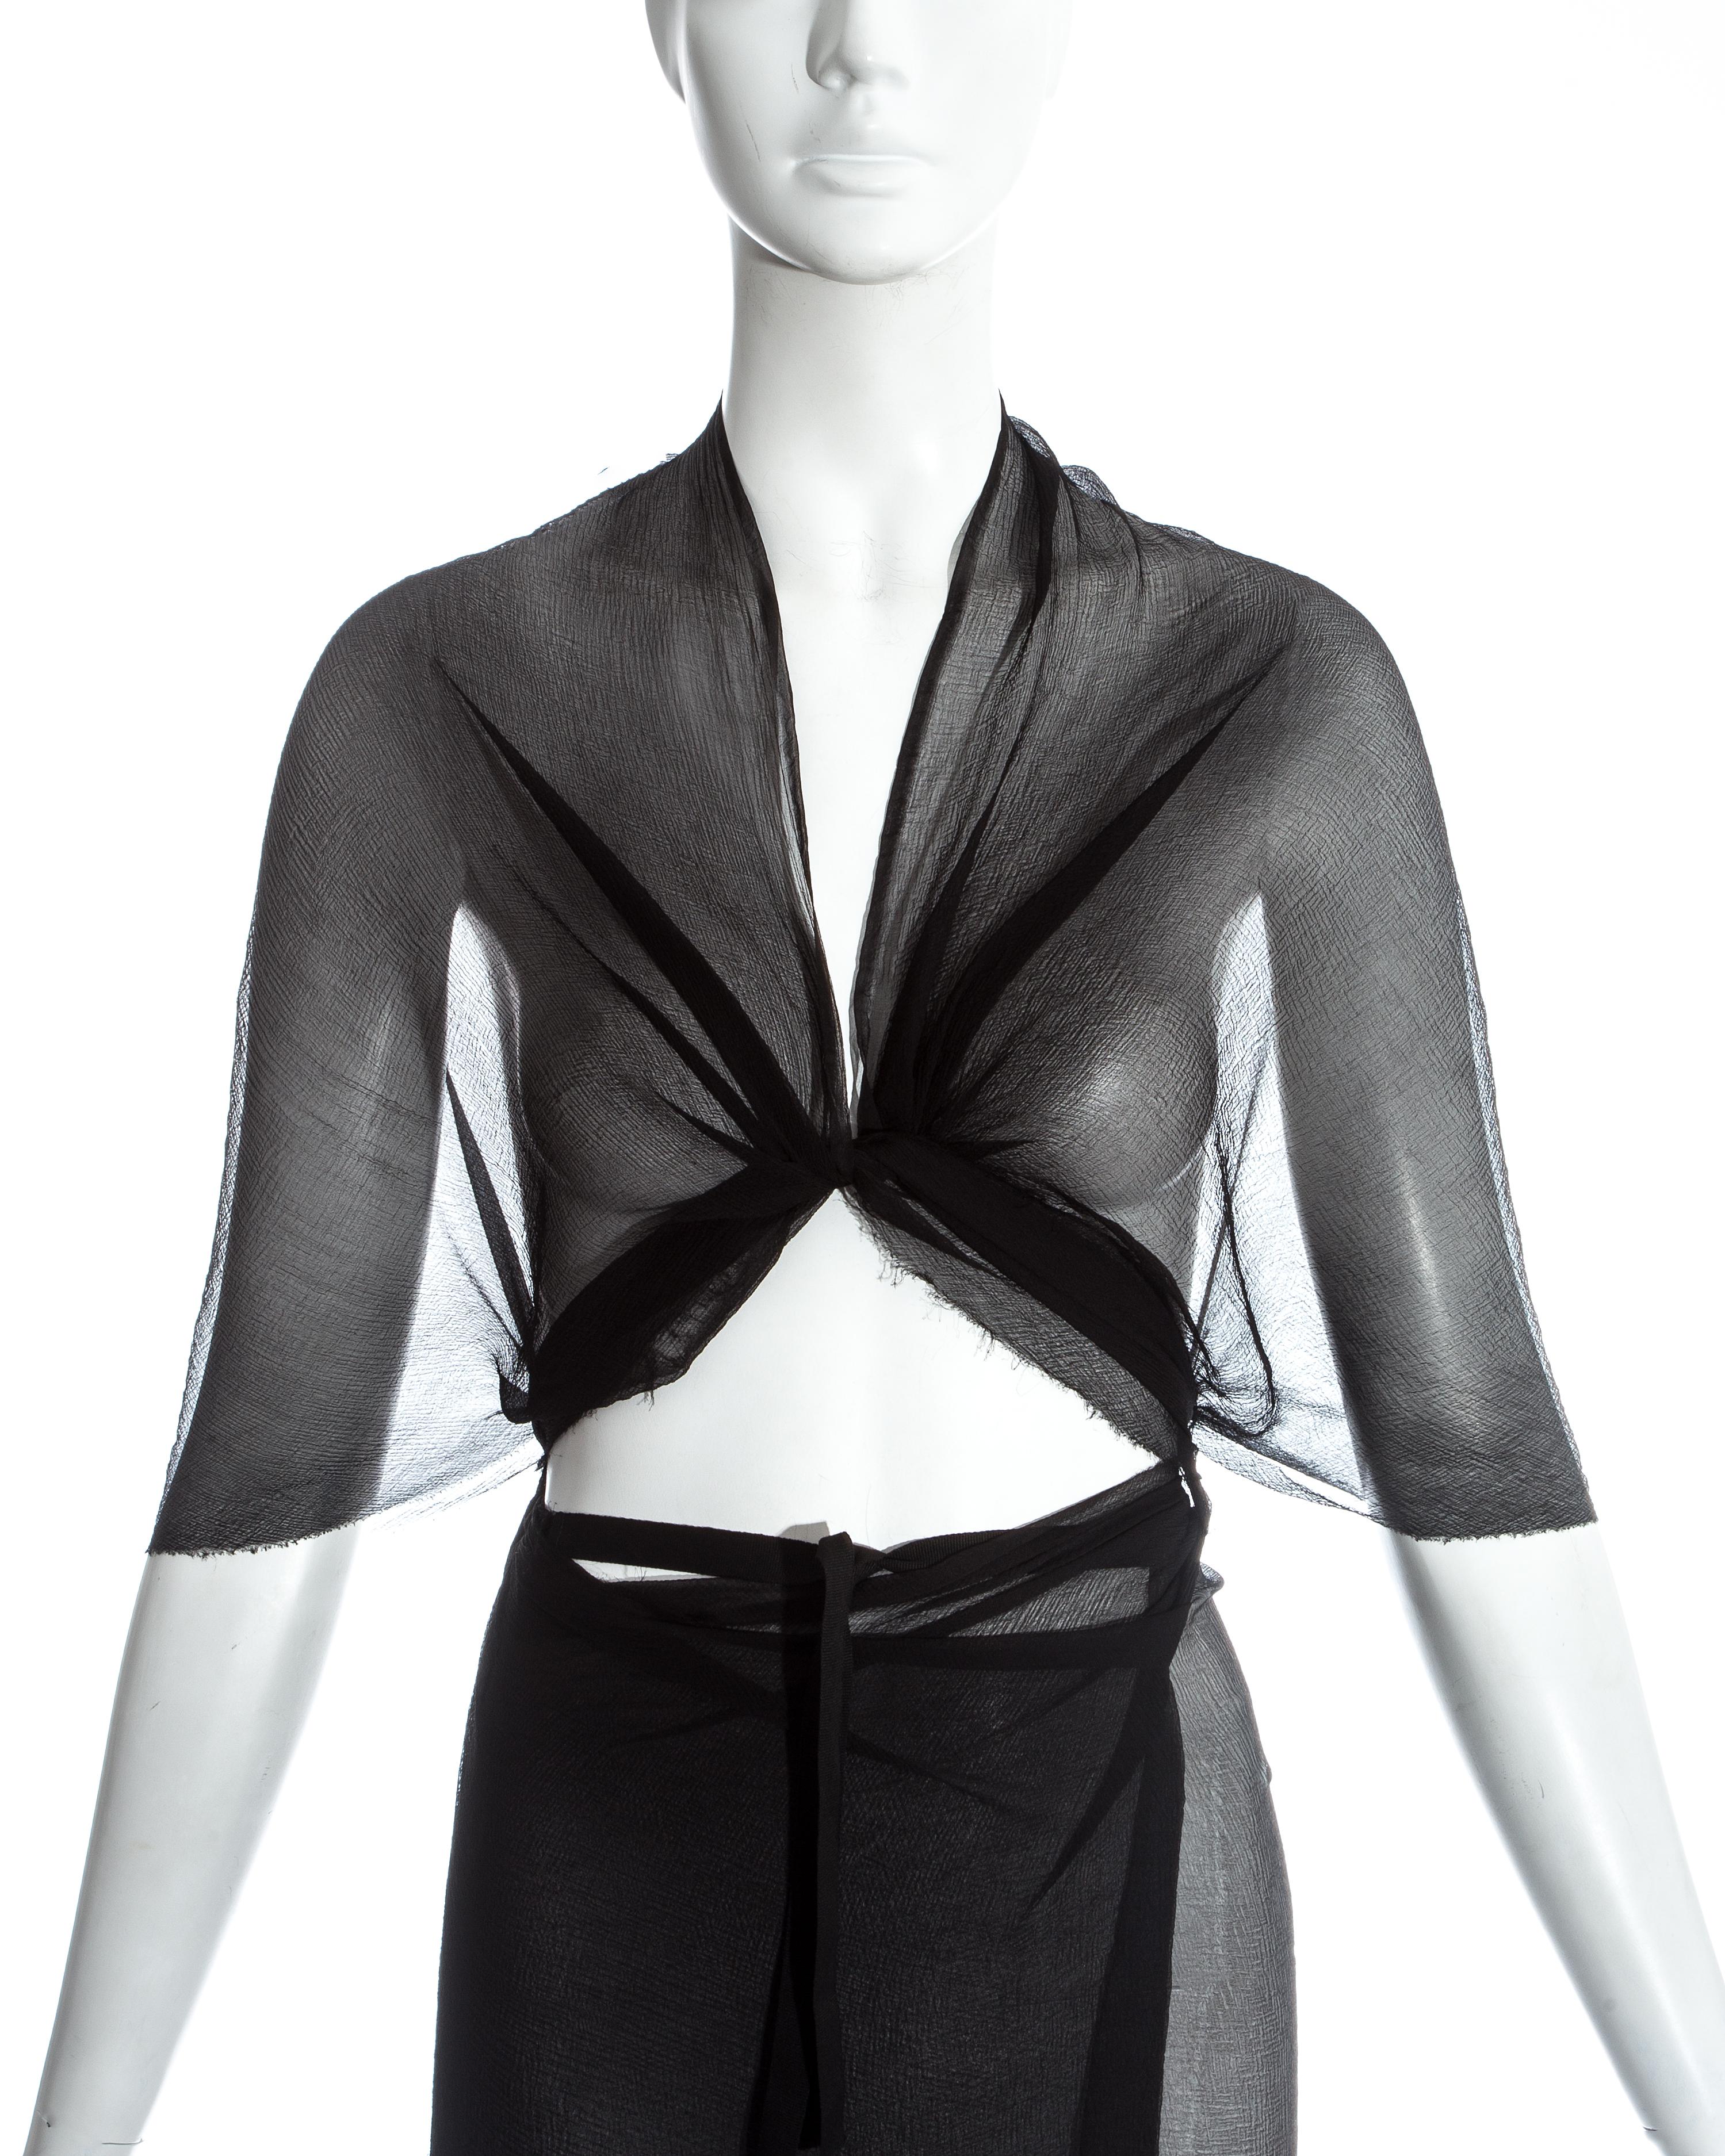 Black Margiela Artisanal black silk chiffon convertible wrap dress / skirt, fw 2003